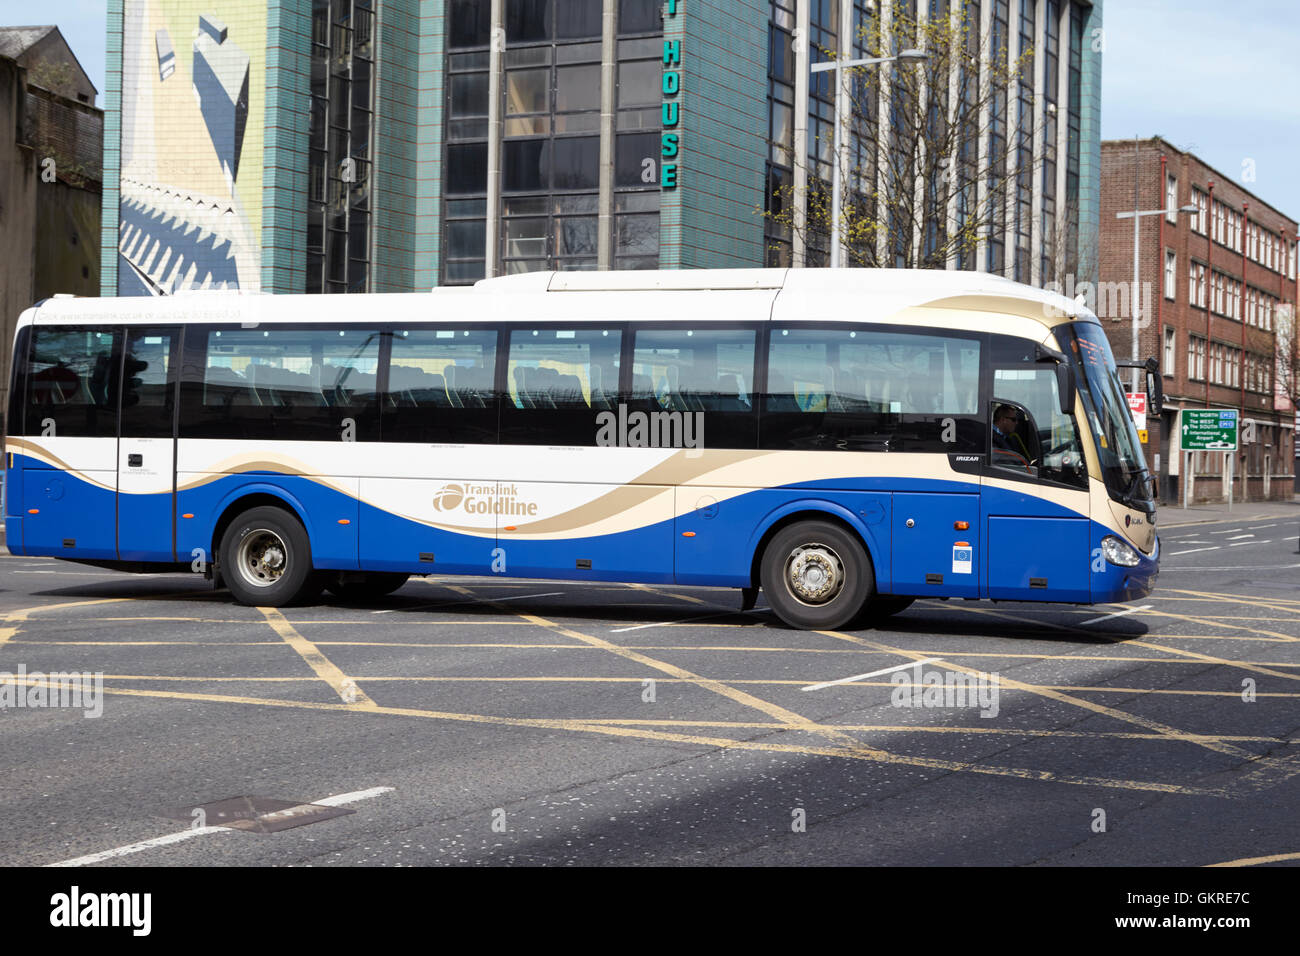 ulsterbus translink goldline coach service in belfast city centre Stock Photo